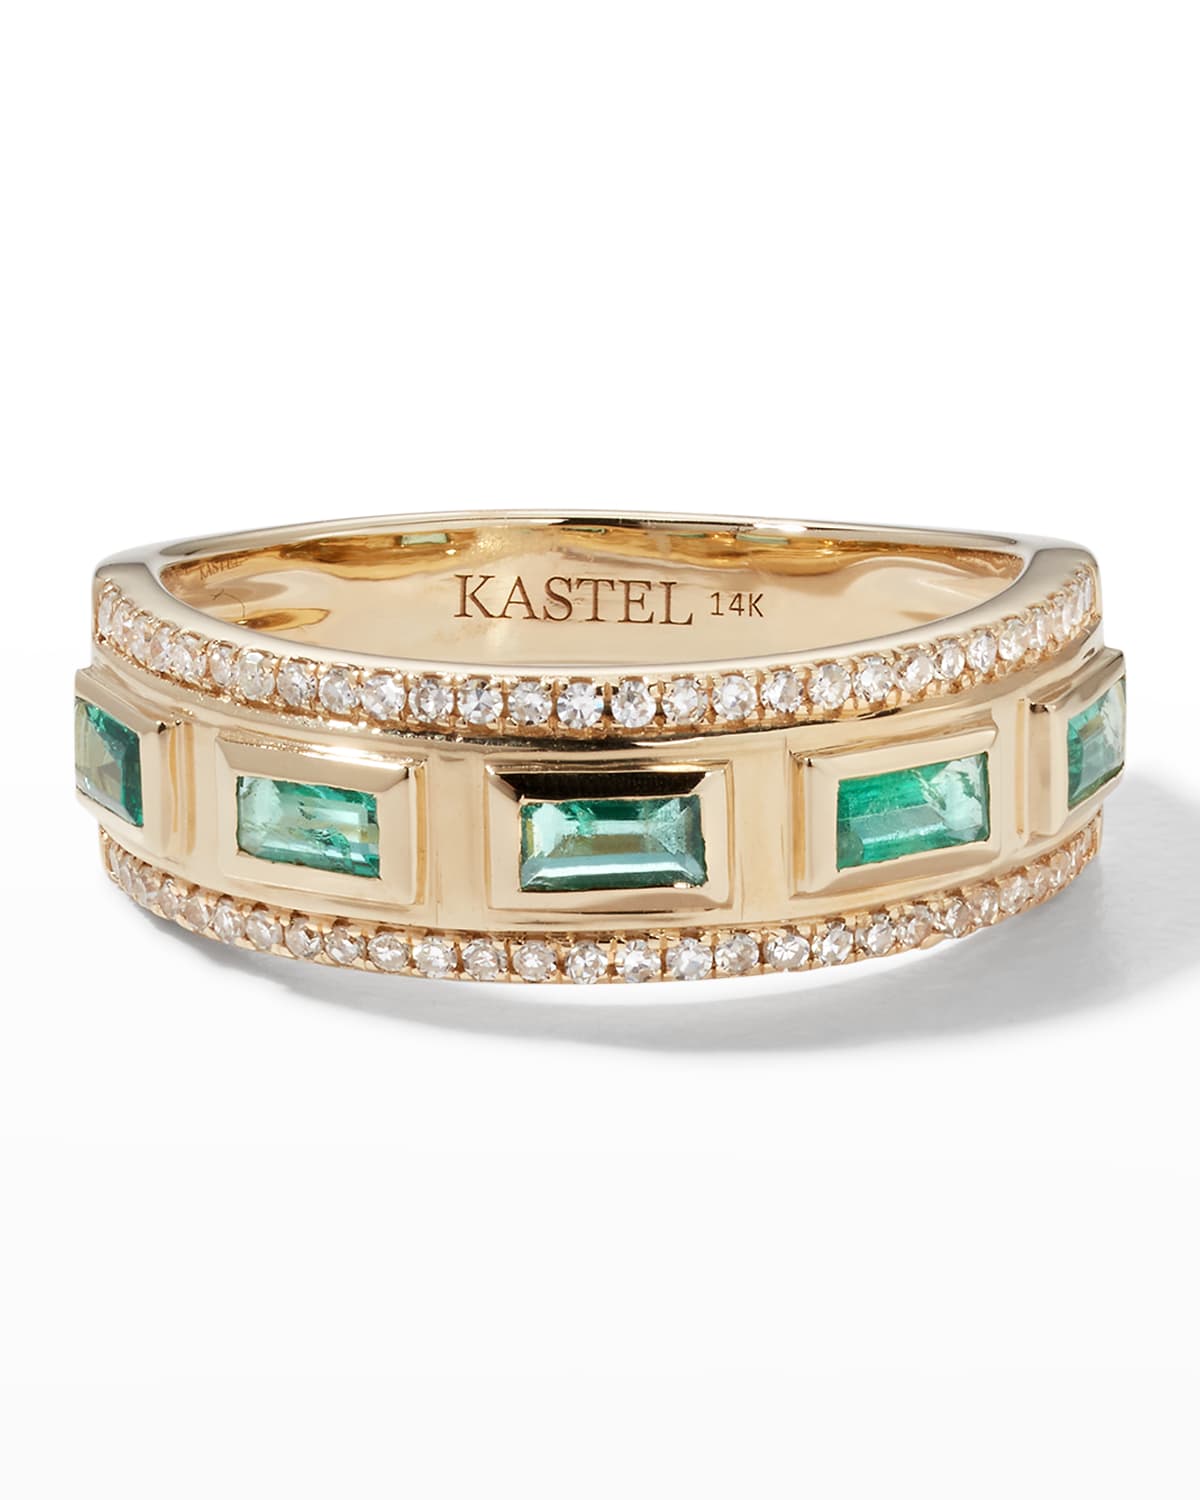 Kastel Jewelry 14k Emerald and Diamond Ring, Size 7